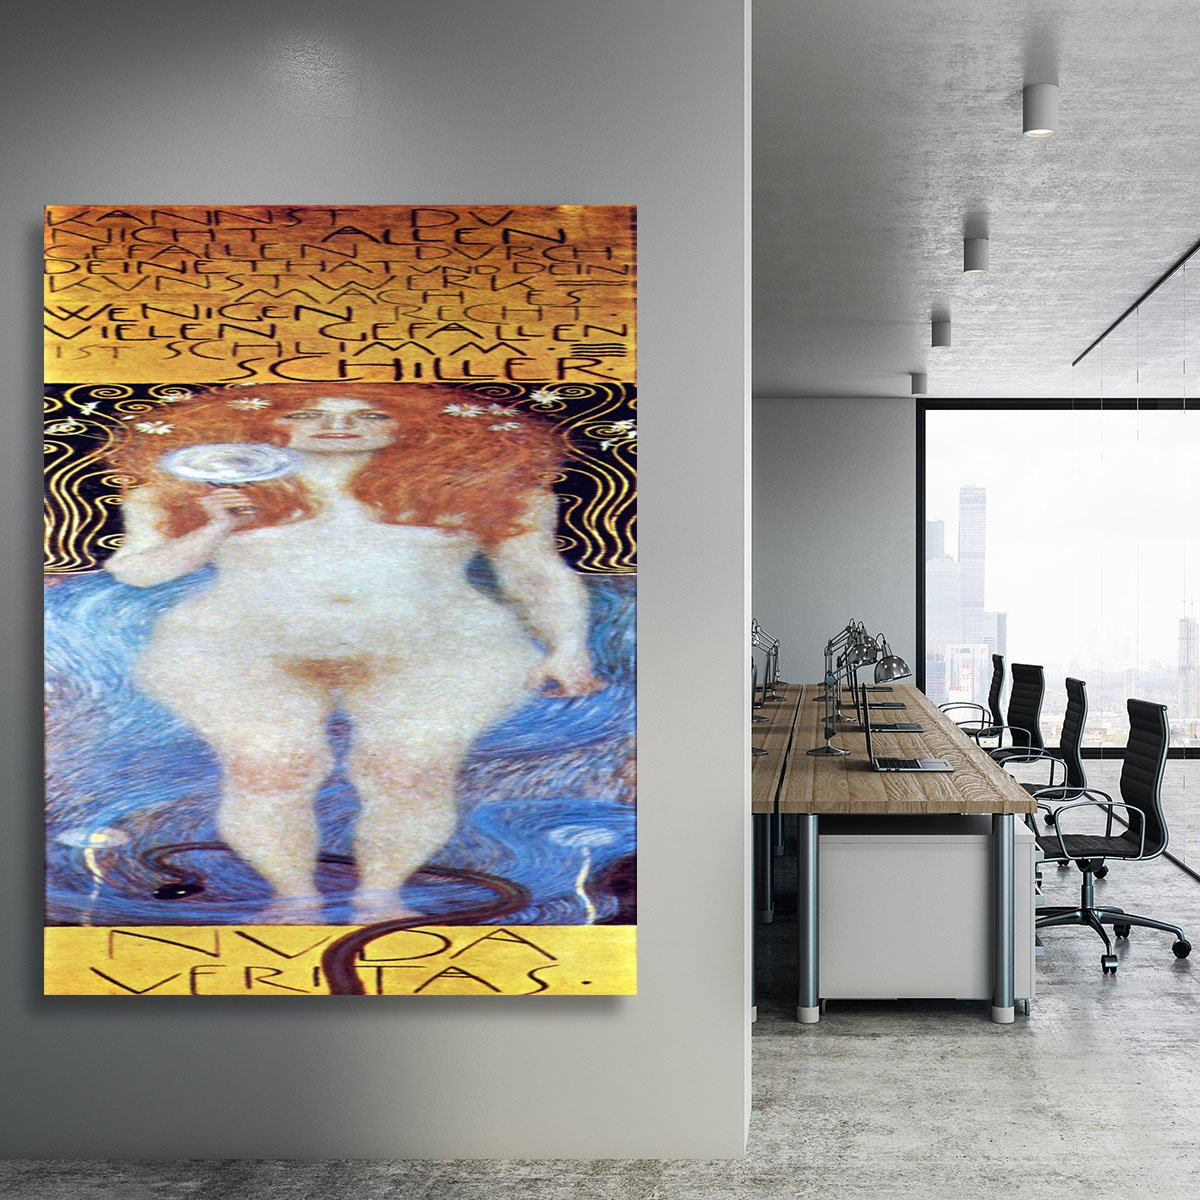 Nuda Veritas Naked Truth by Klimt Canvas Print or Poster